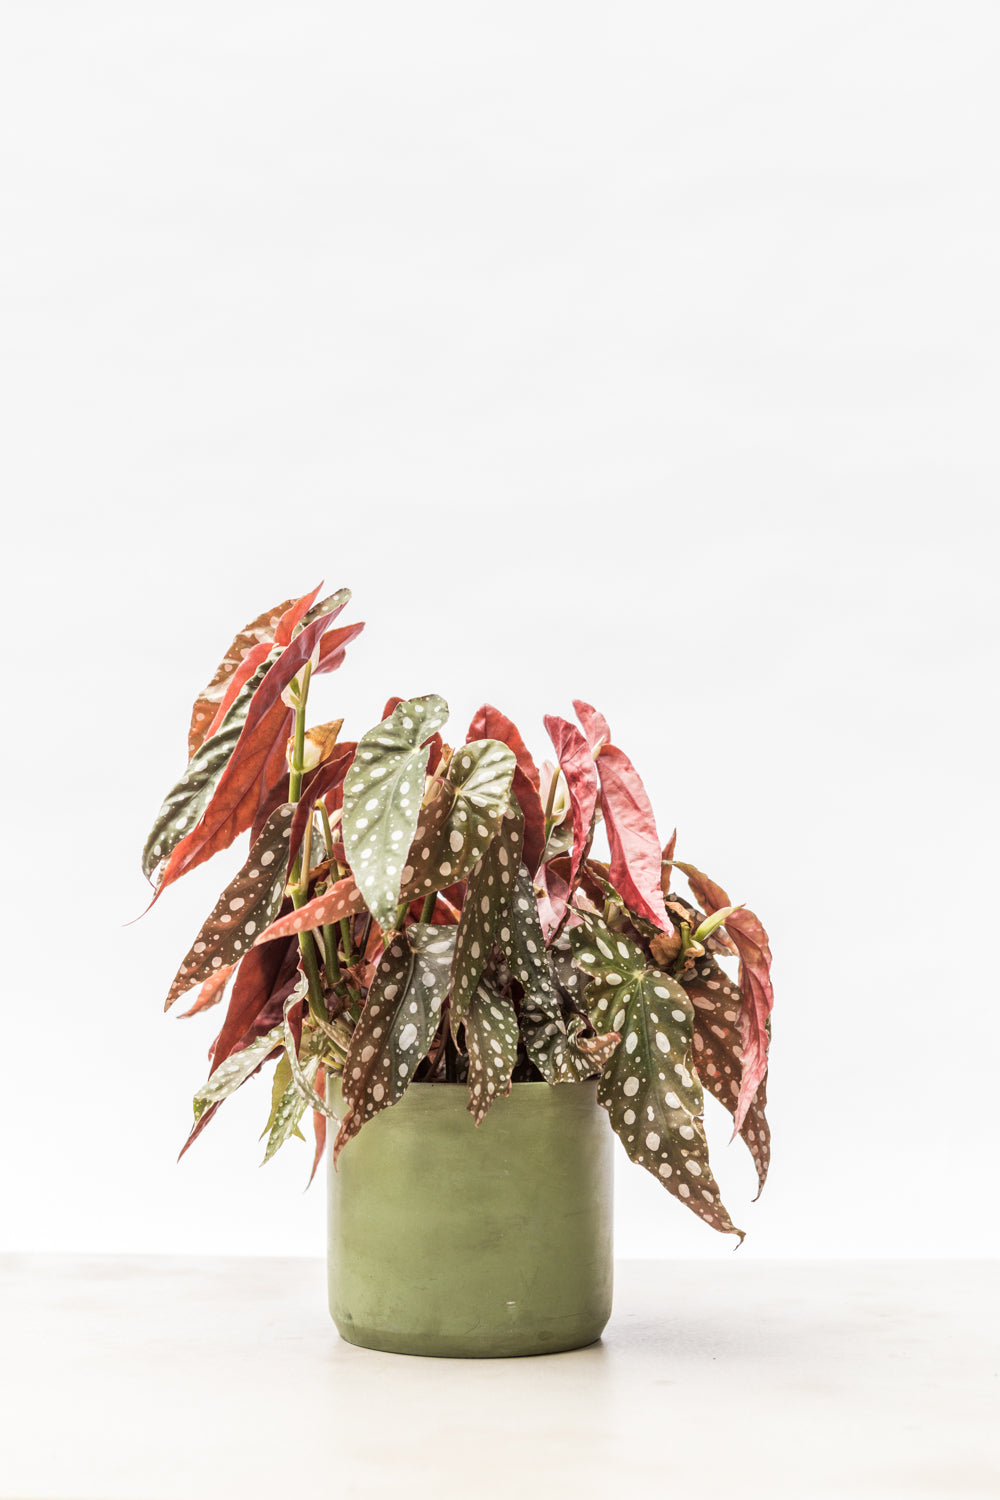 Polkadot Begonia / Angel Wing Plant